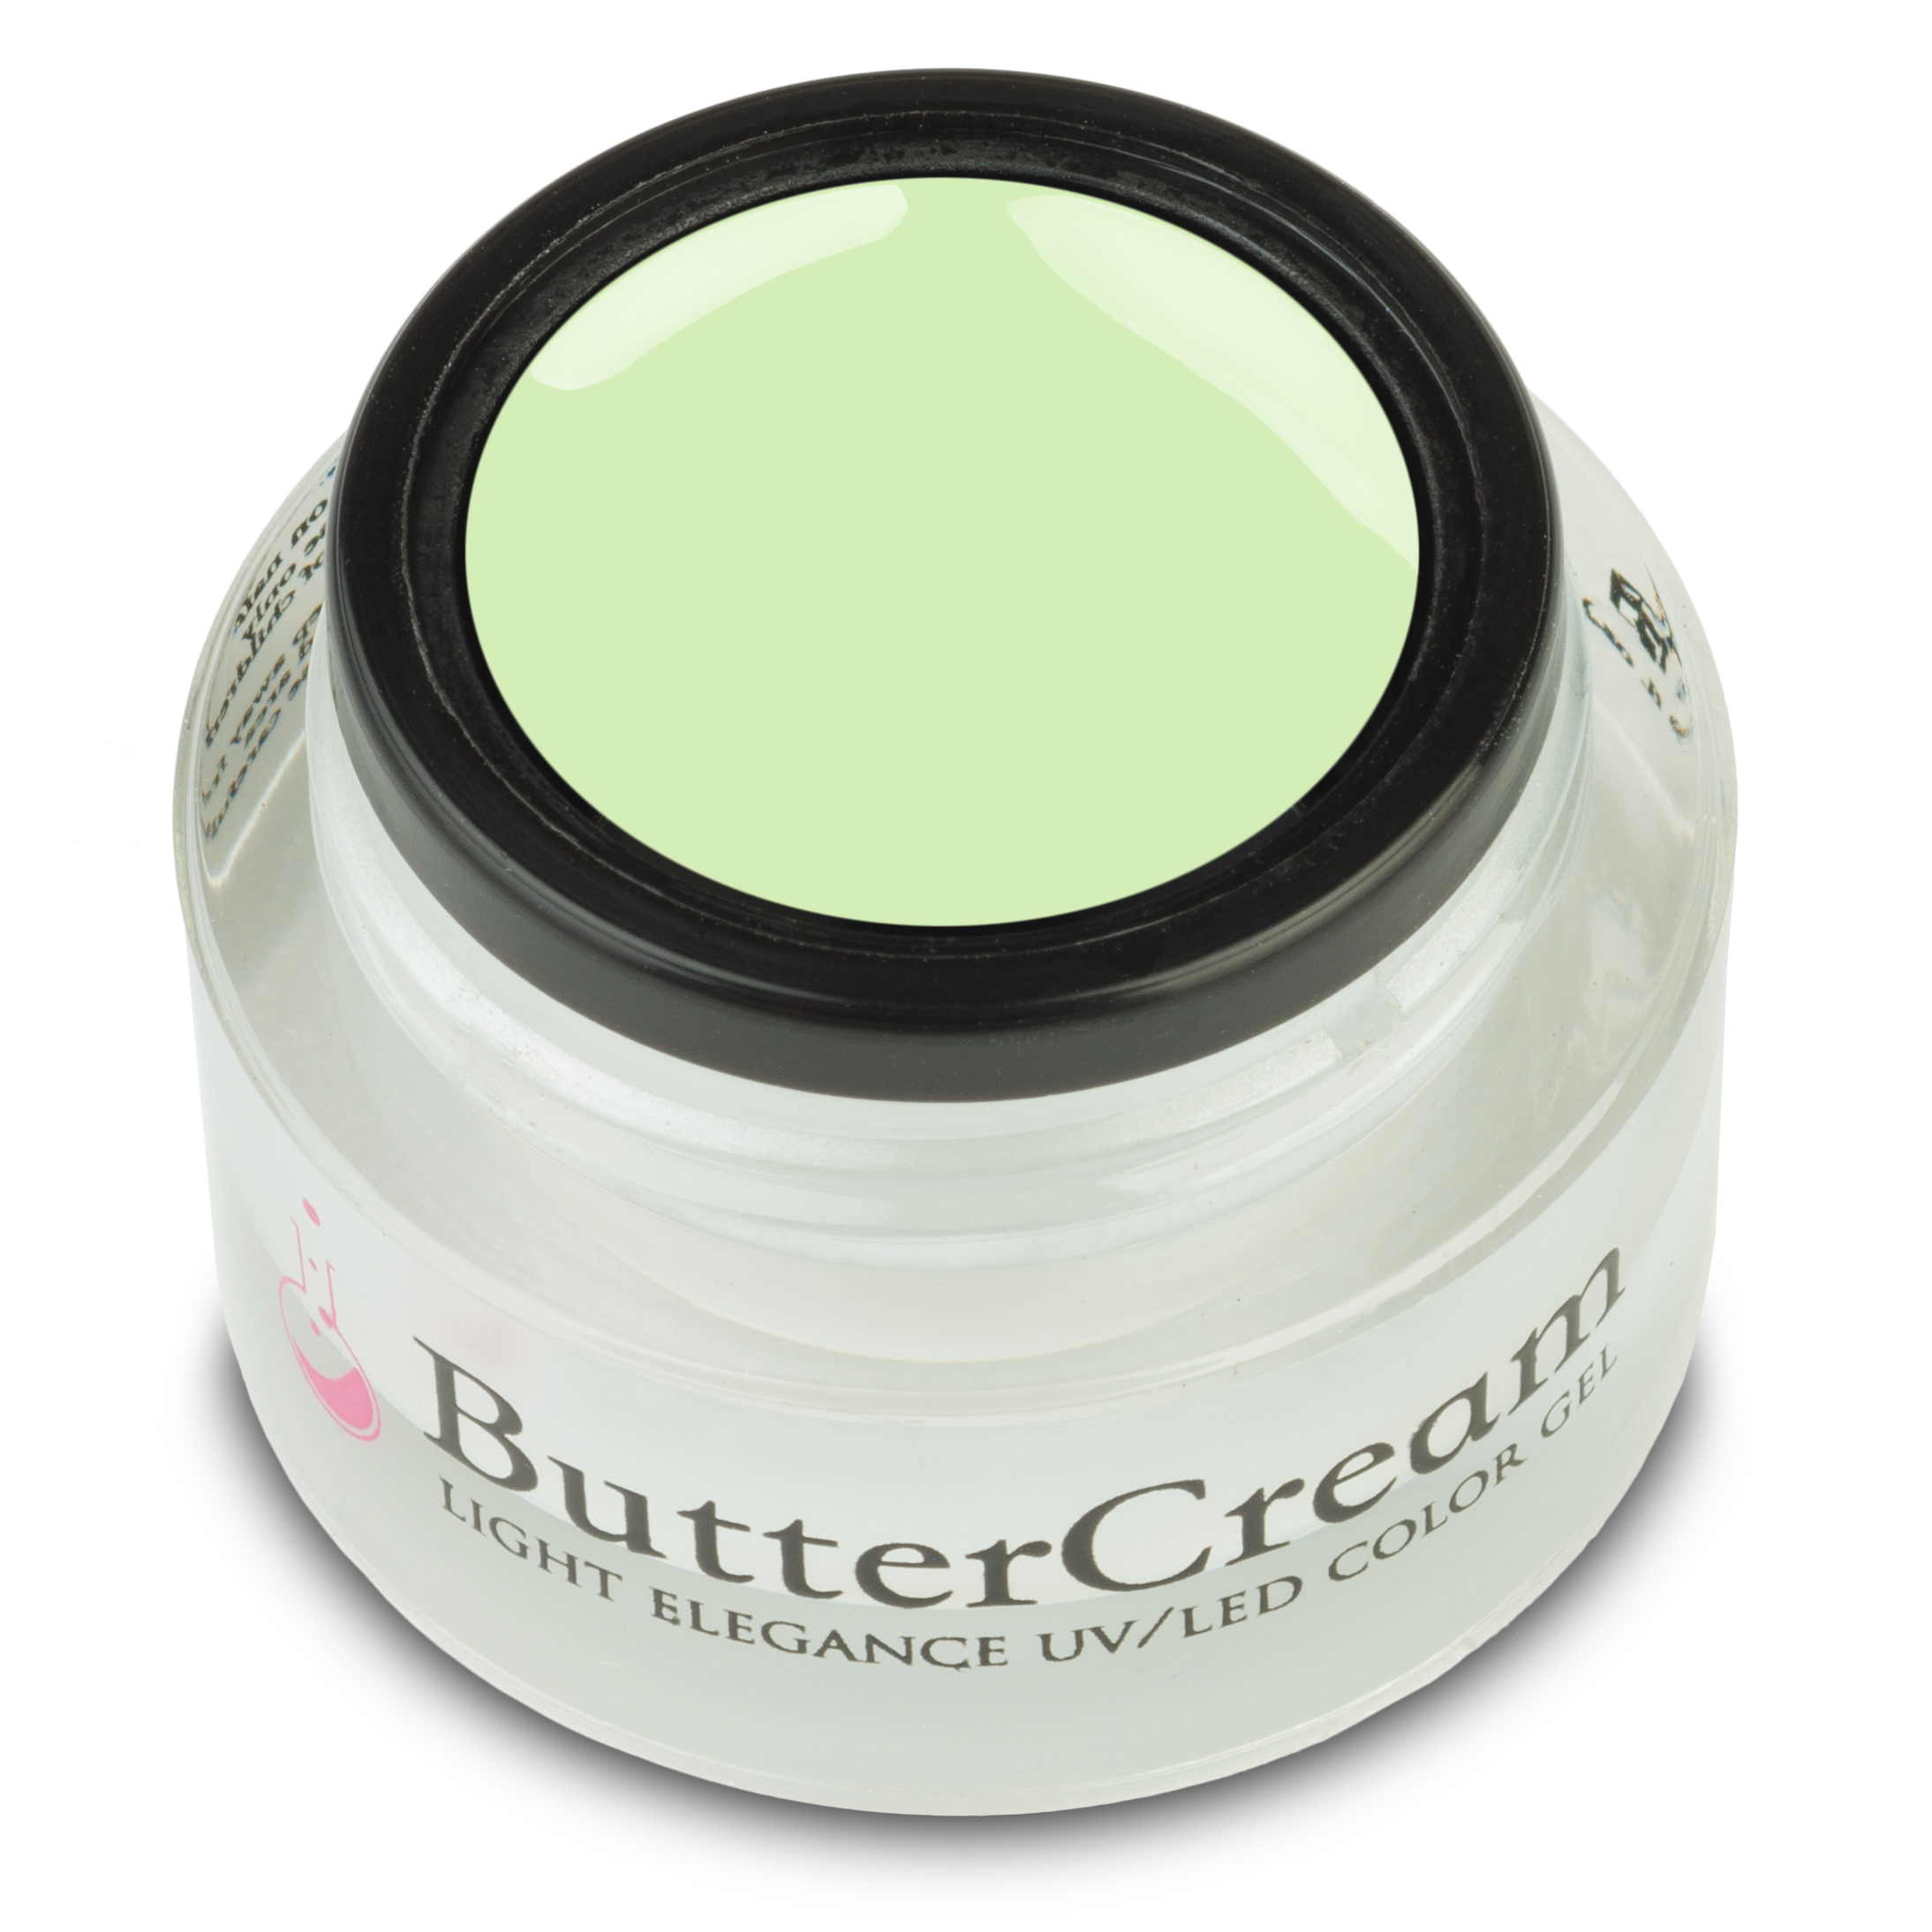 Light Elegance ButterCreams LED/UV - Veggies & Vines - Creata Beauty - Professional Beauty Products